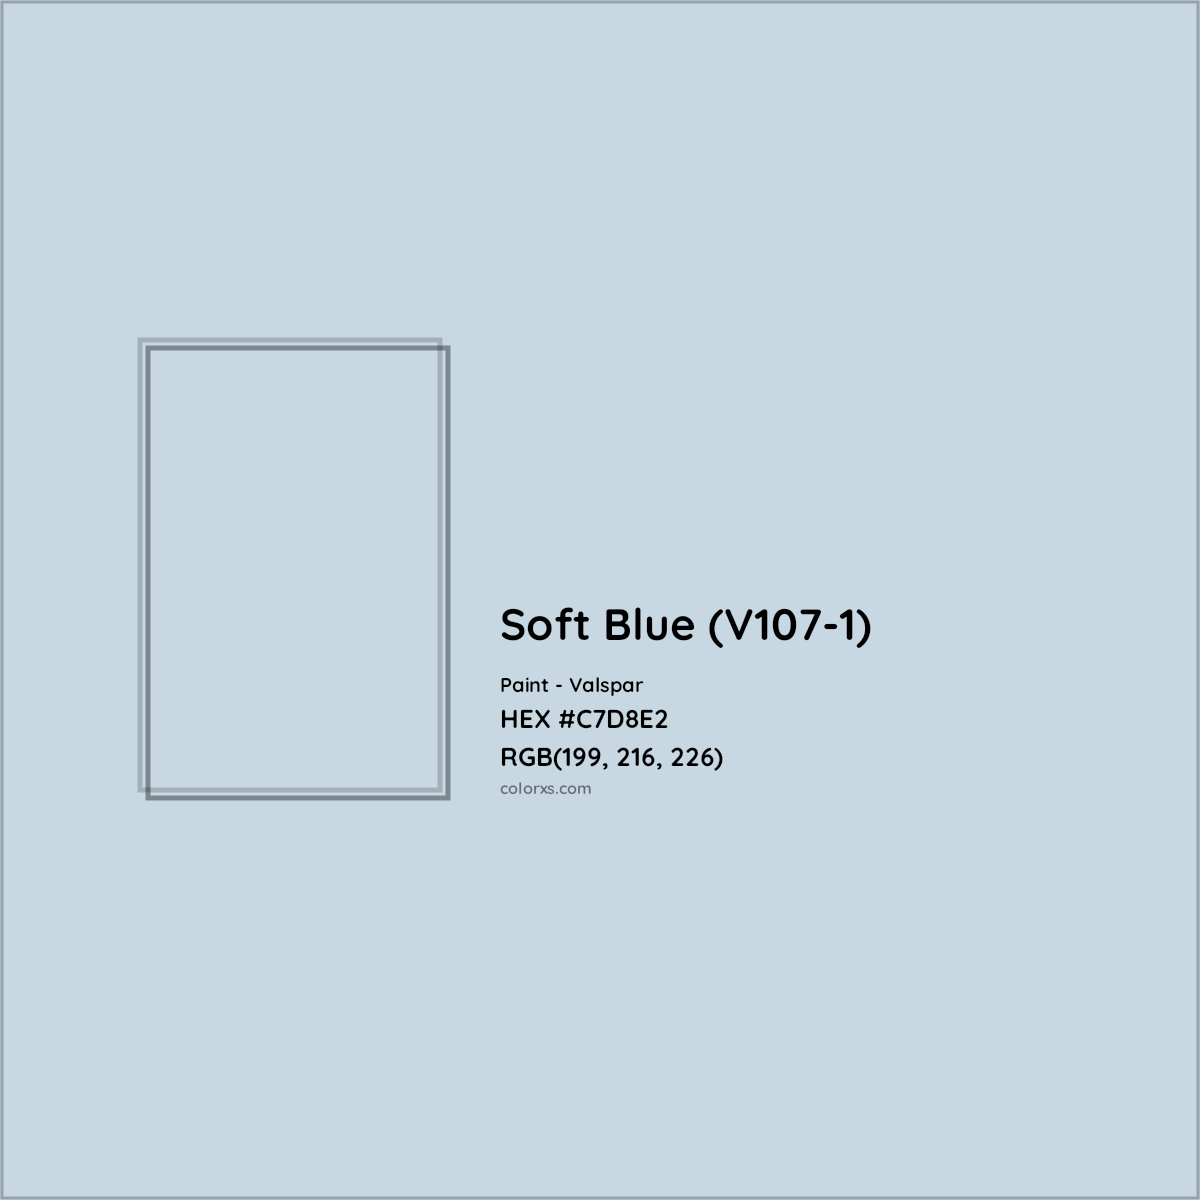 HEX #C7D8E2 Soft Blue (V107-1) Paint Valspar - Color Code